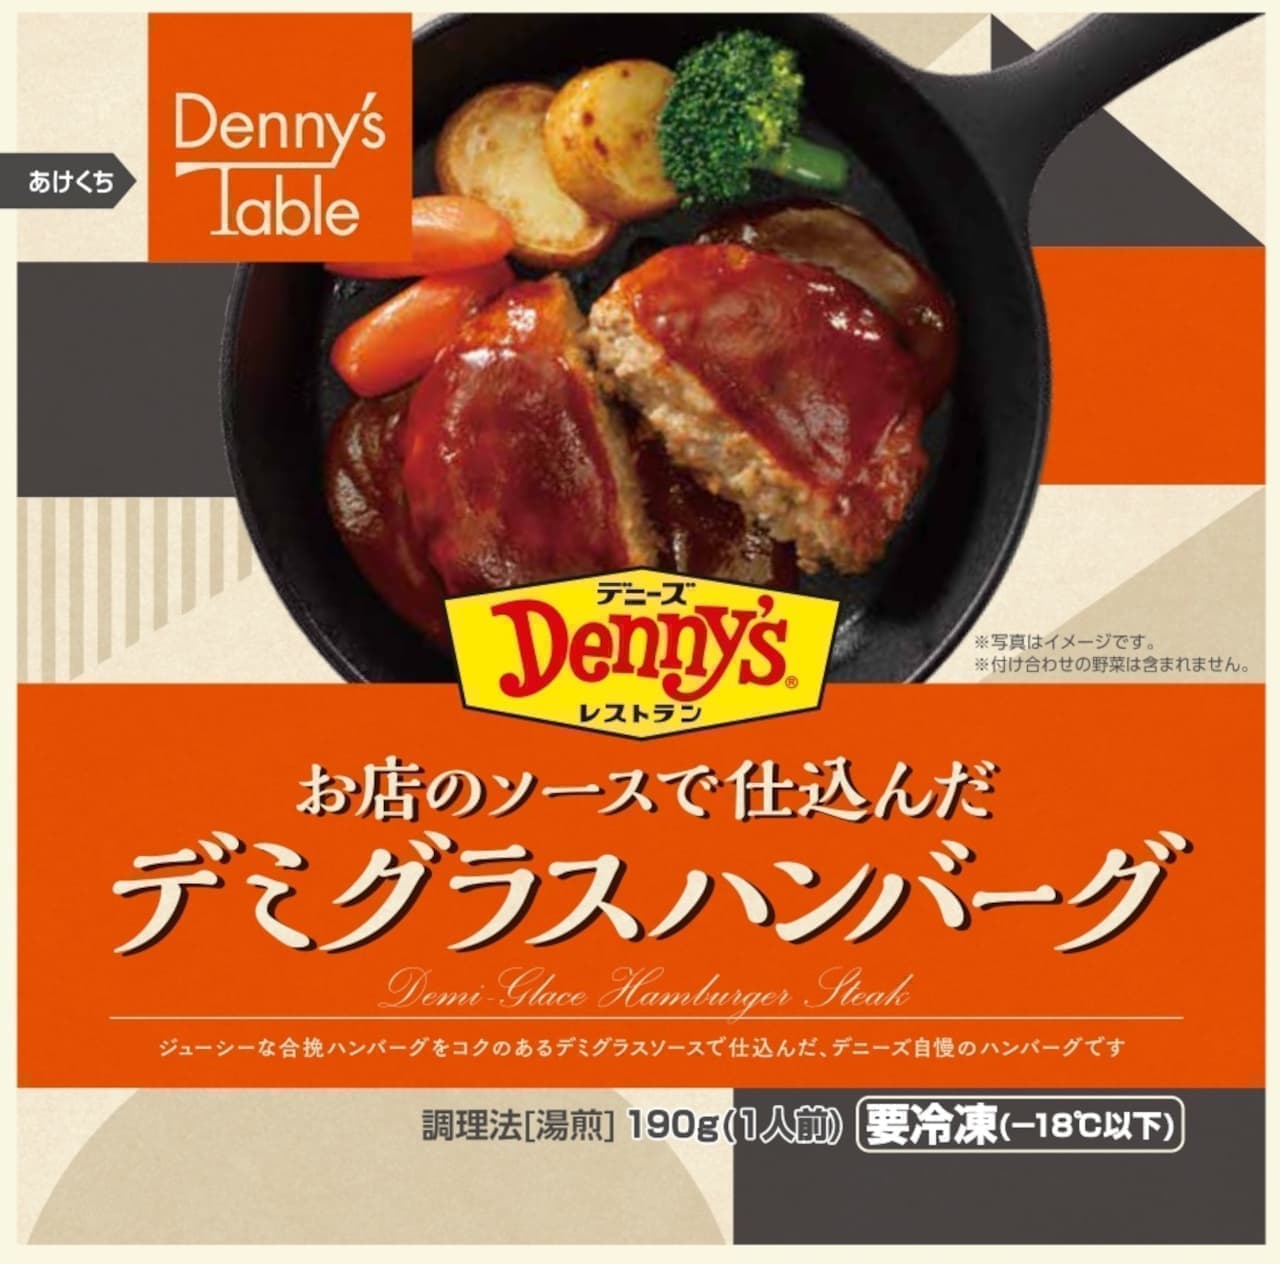 Denny's "Demi-glace hamburger prepared with restaurant sauce"